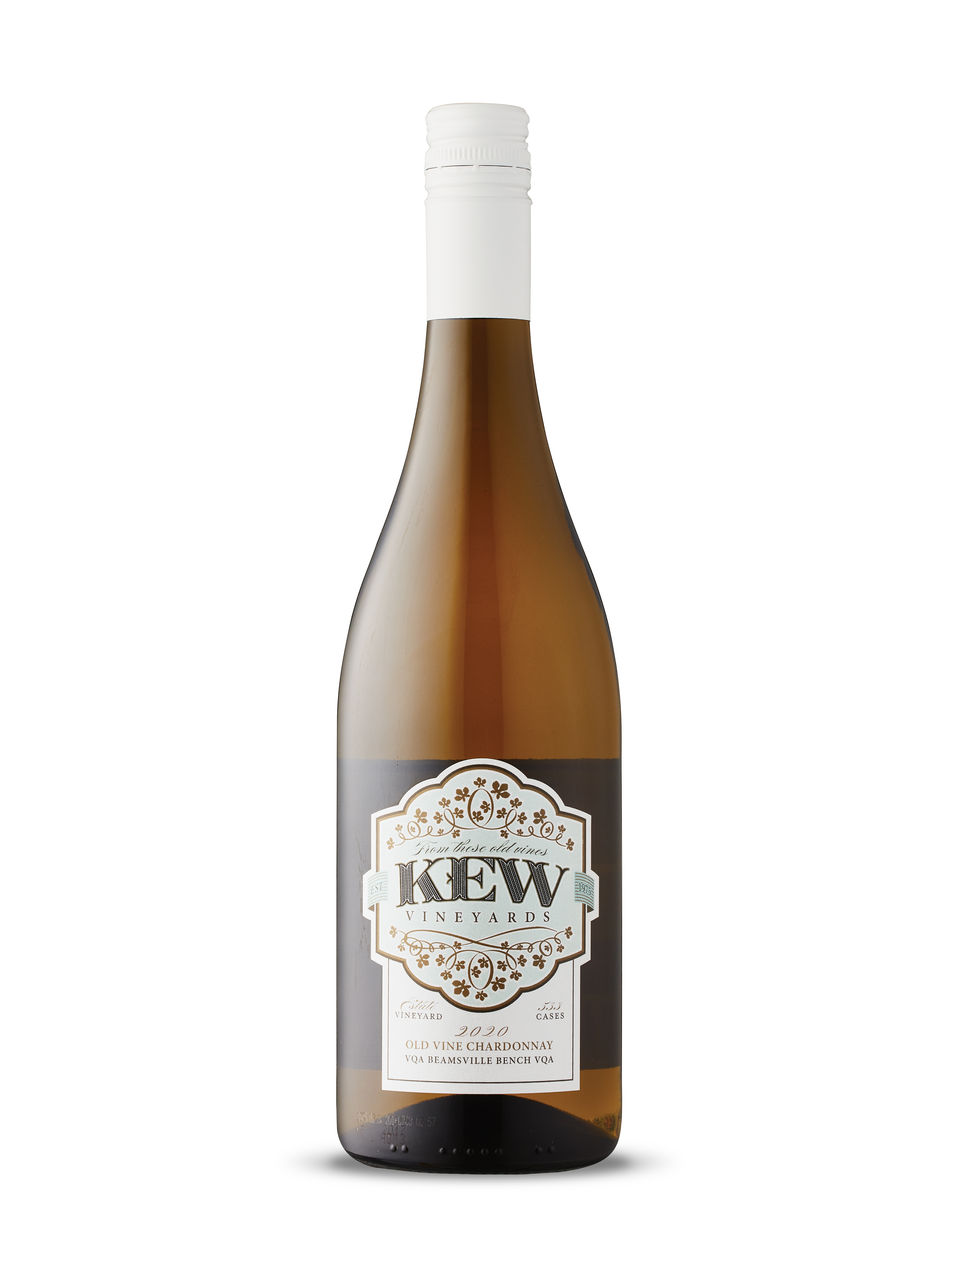 Kew Vineyards Old Vine Chardonnay 2019 - View Image 1